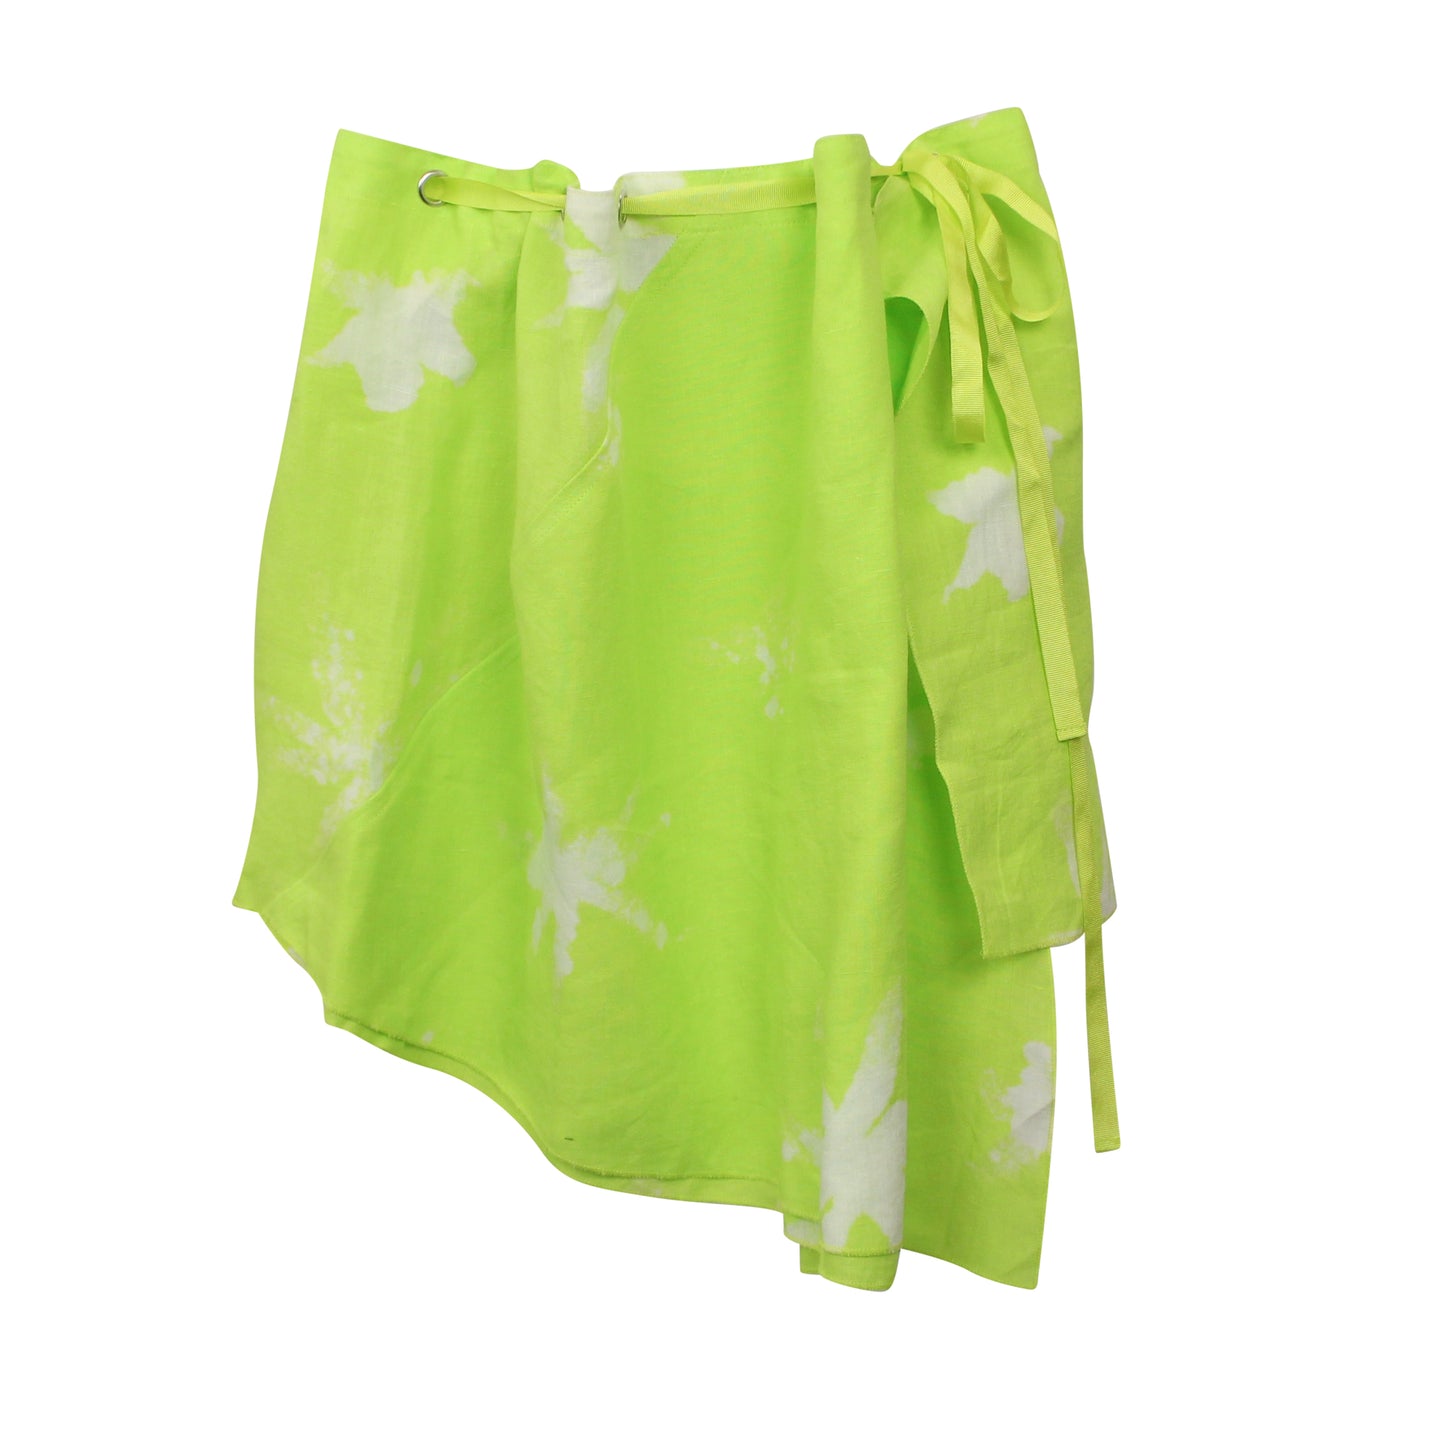 Helenamanzano Anenome Wrap Skirt - Lime